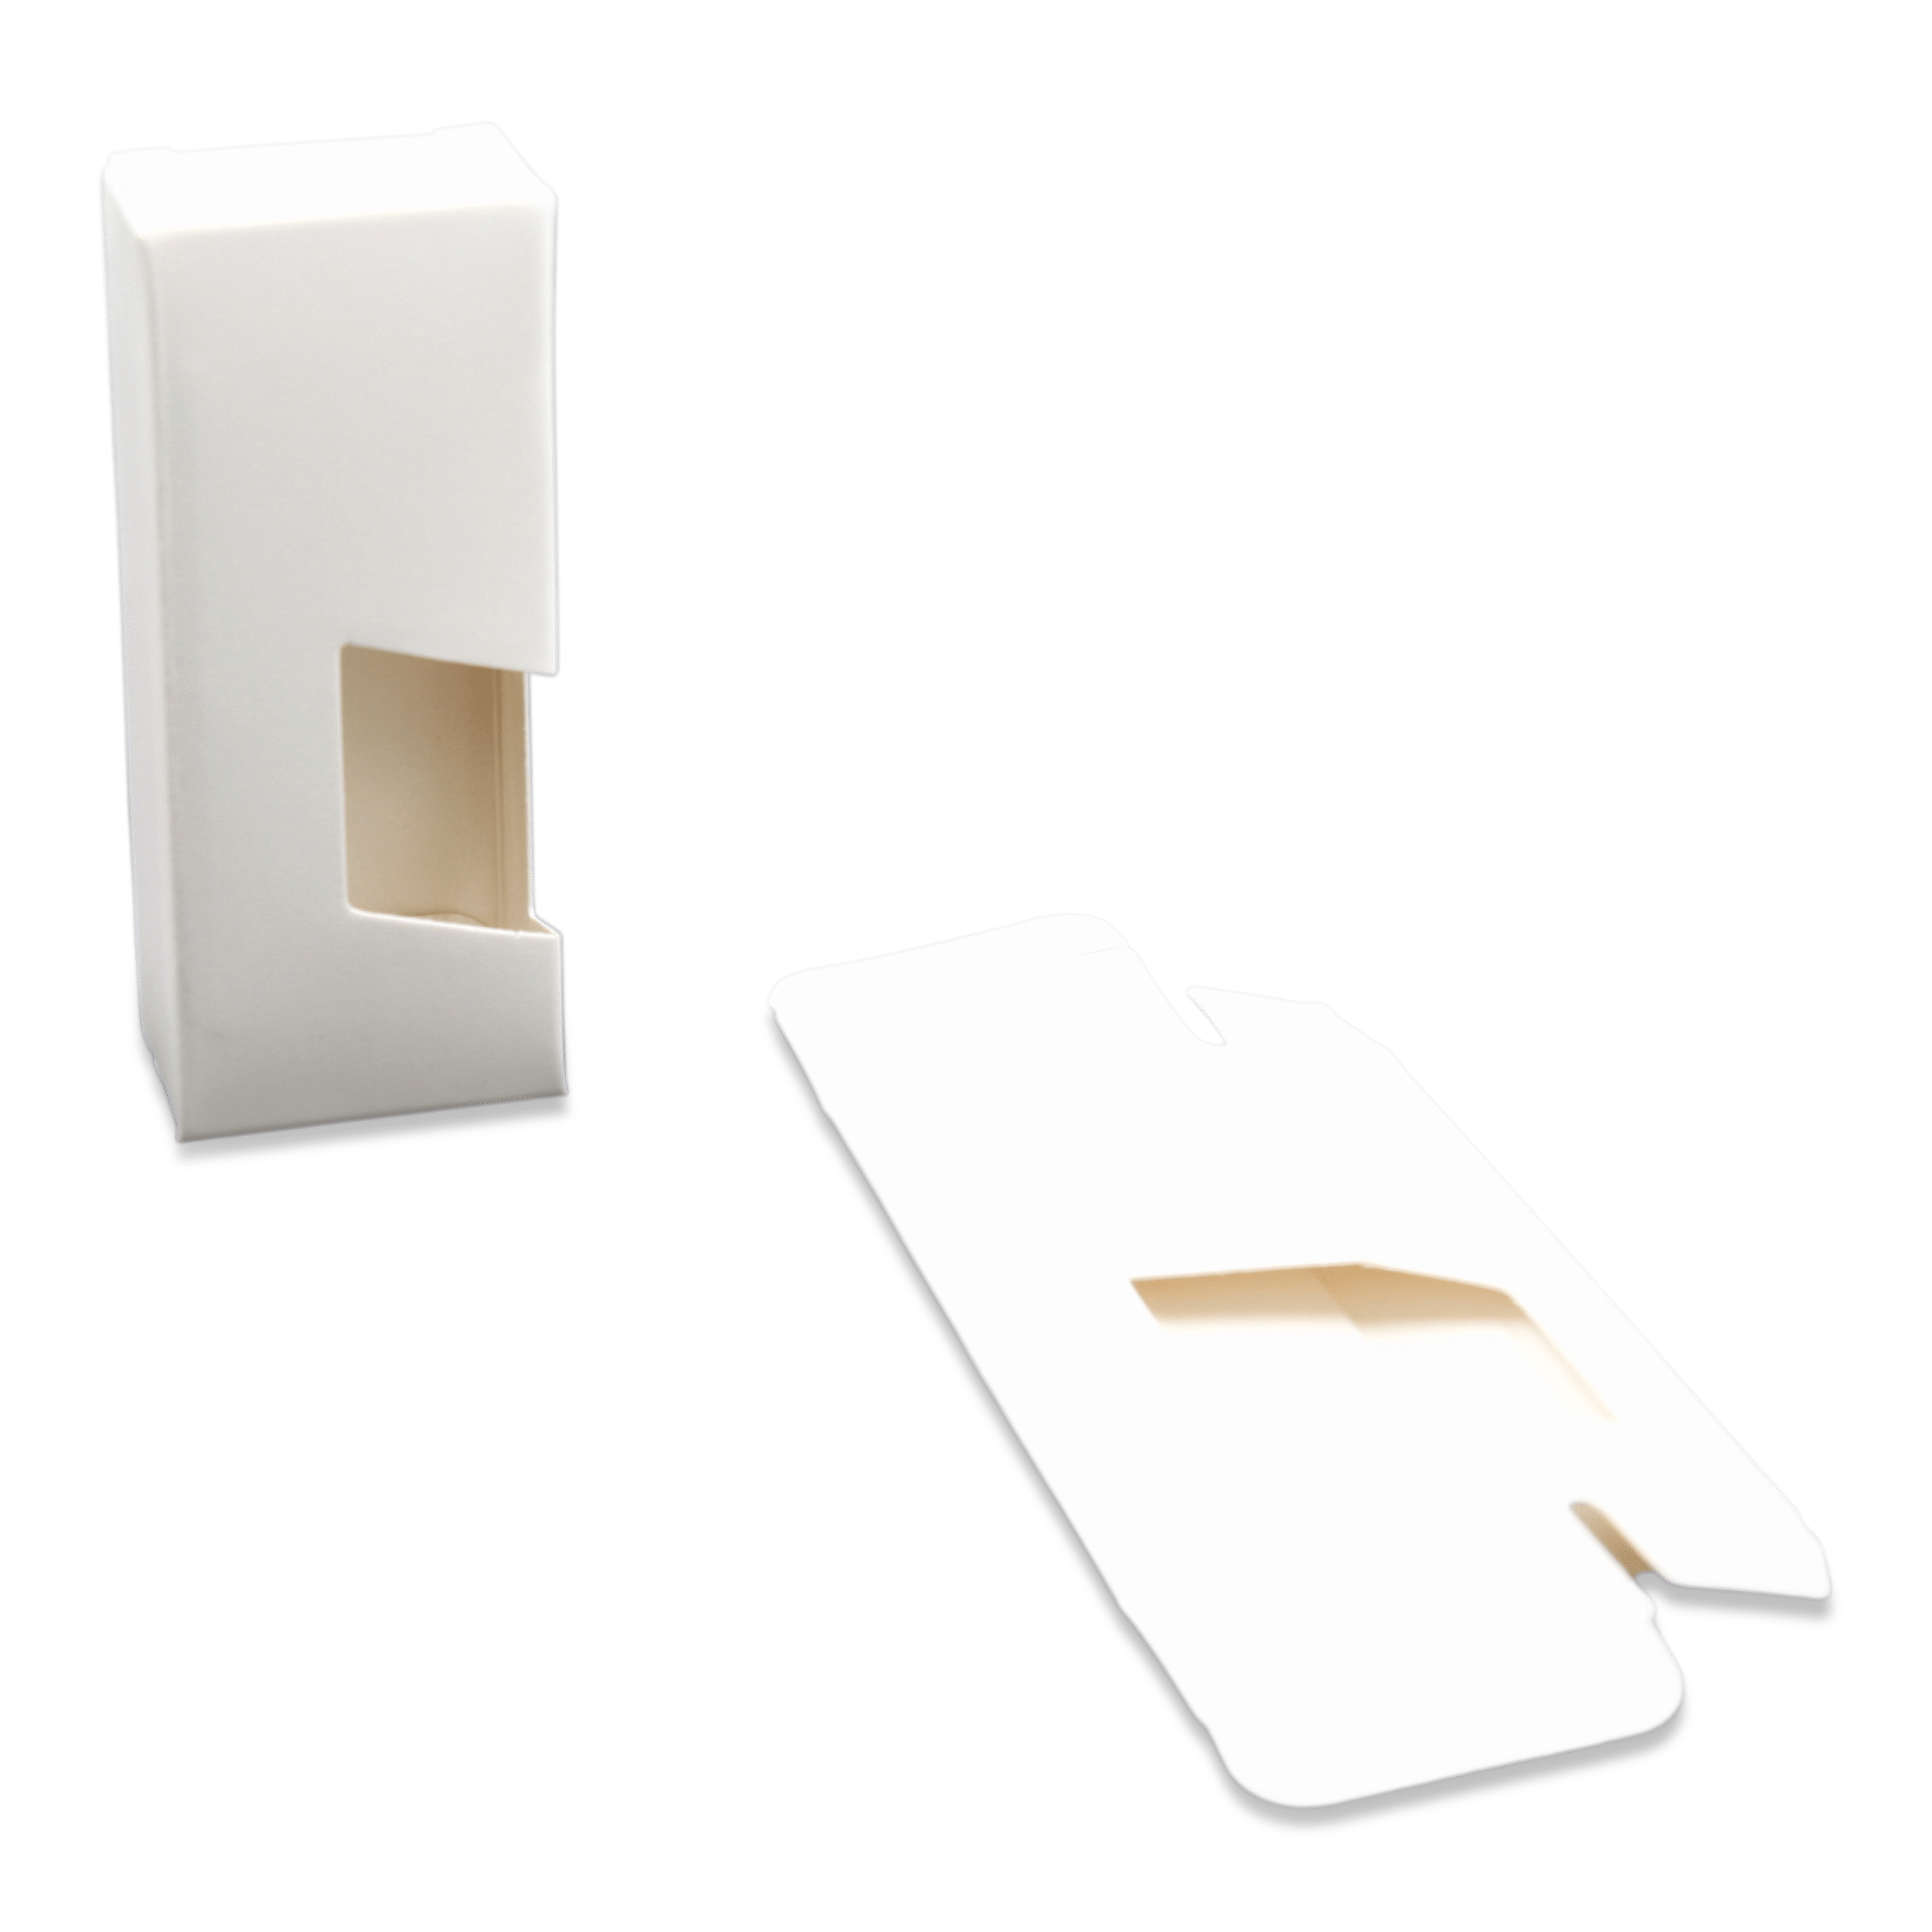 White Child-Resistant Cartridge Tube Box